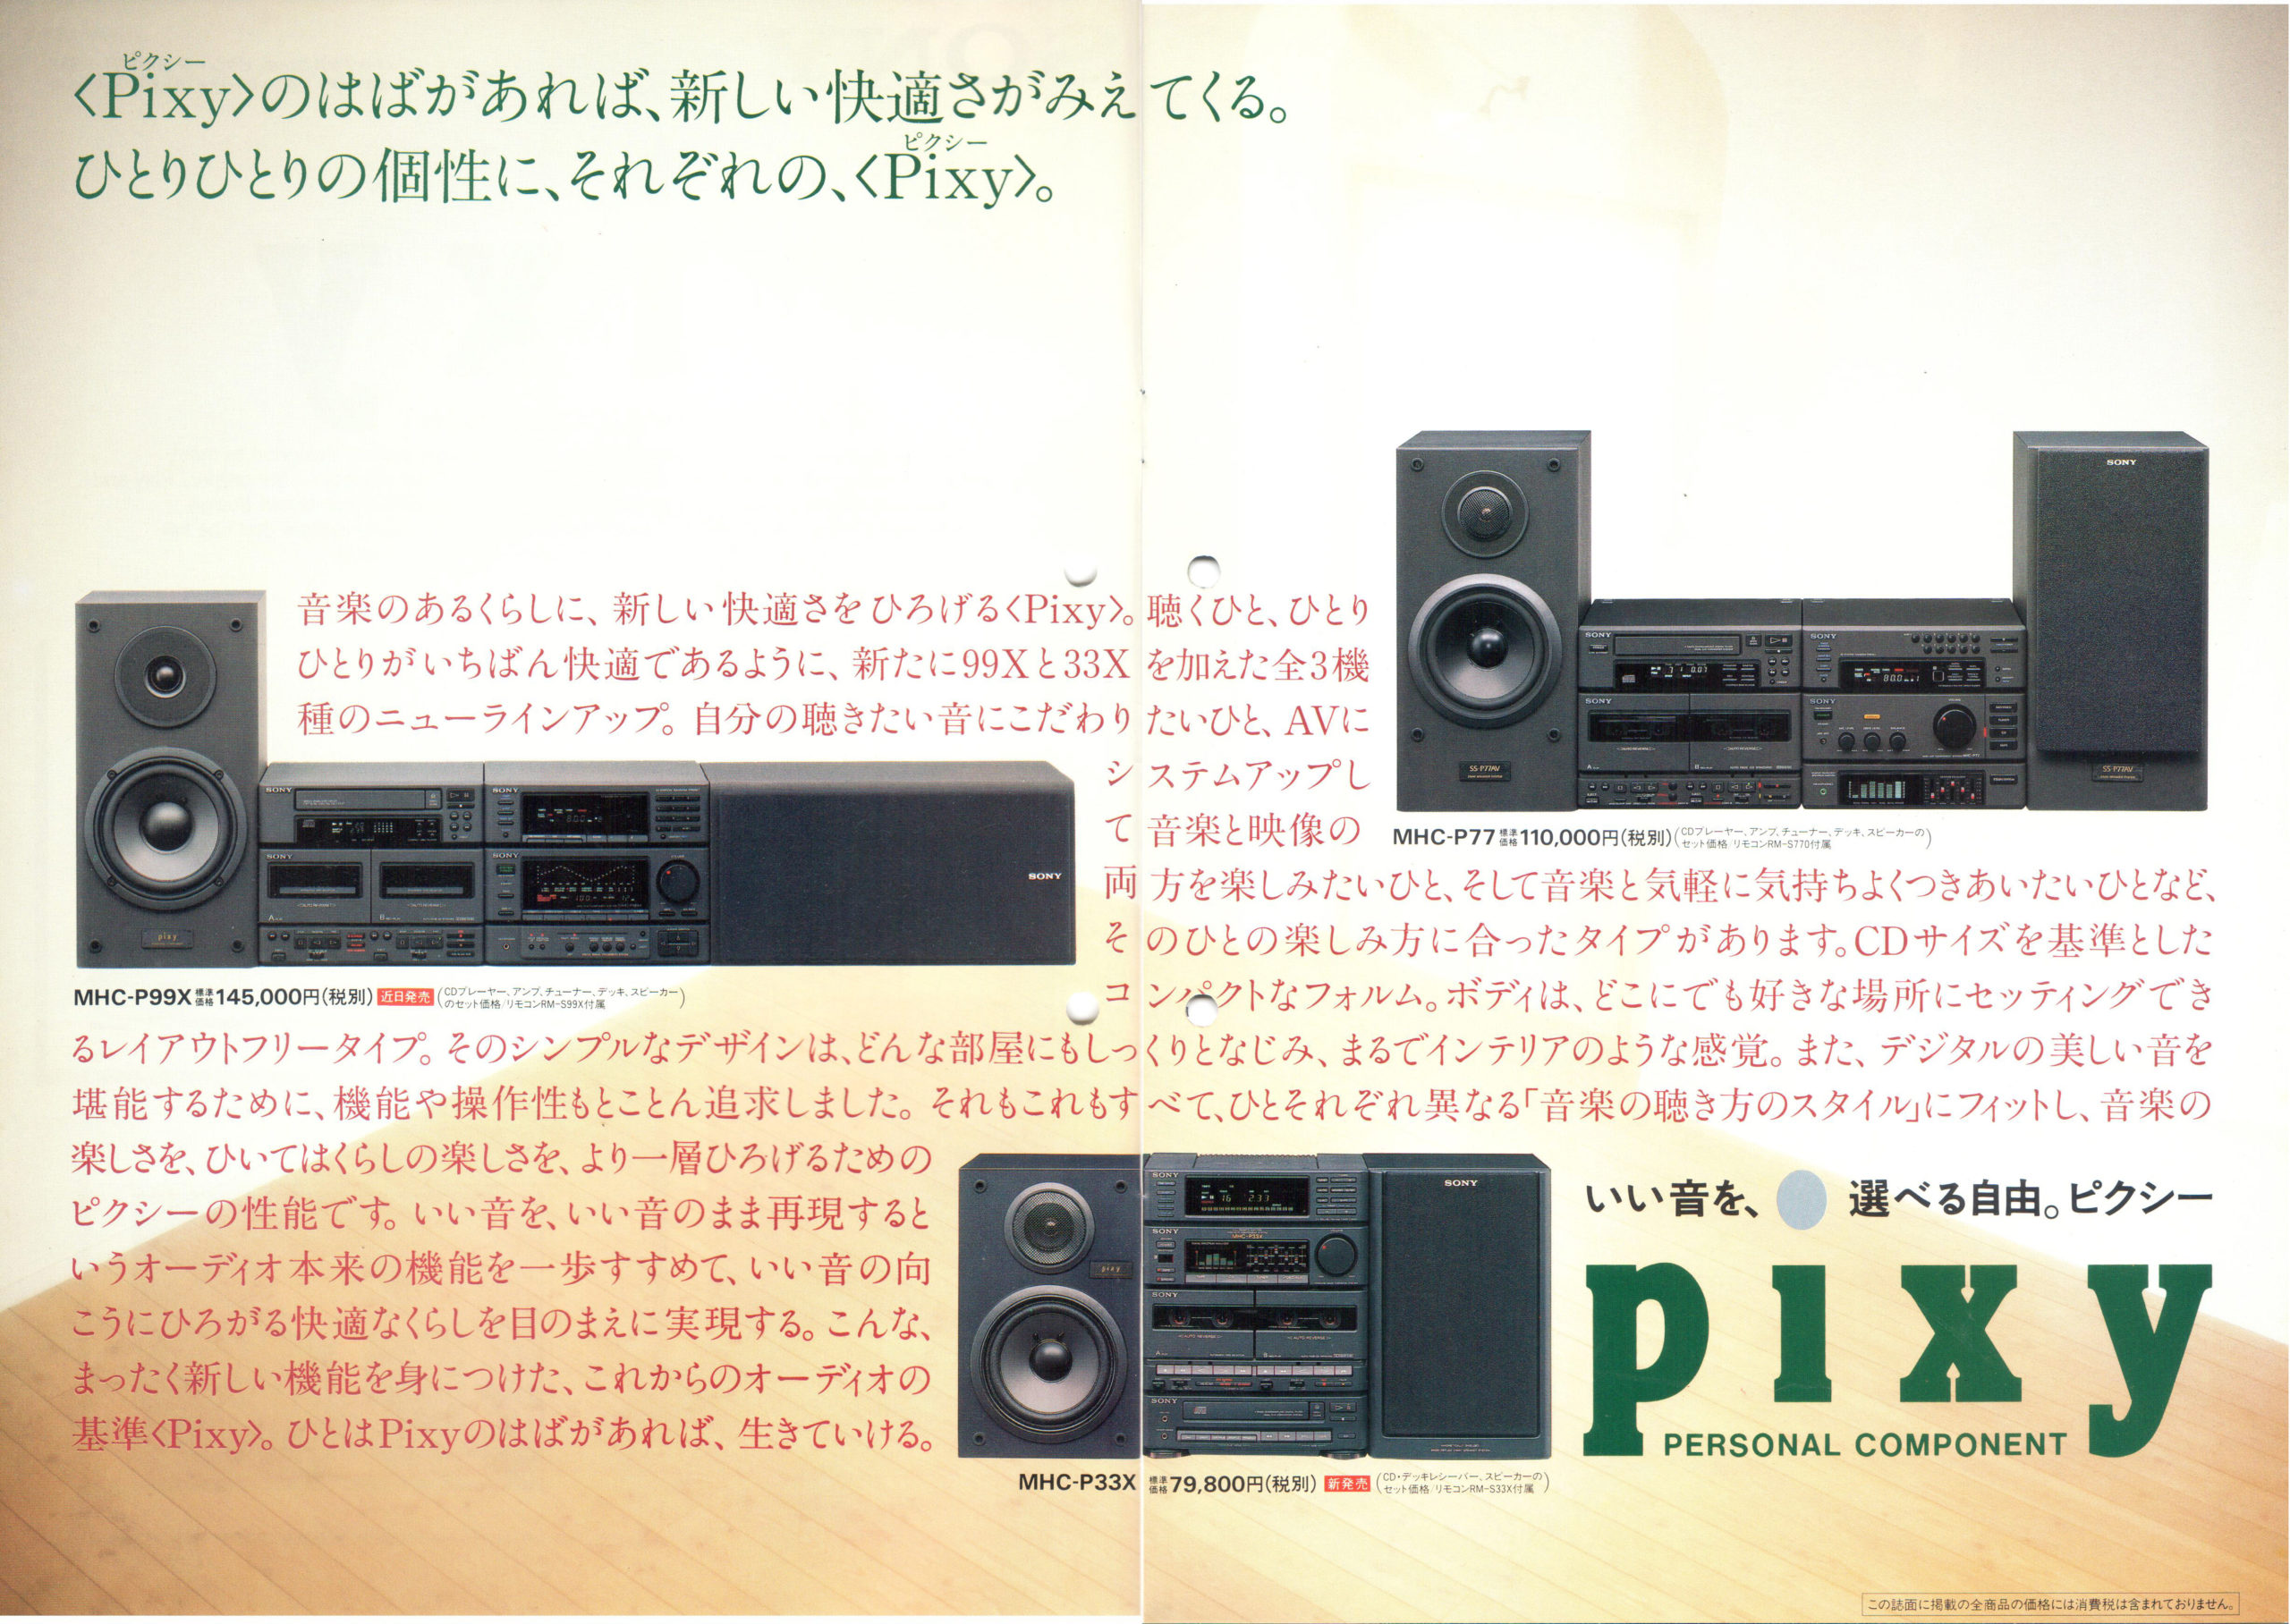 Catalog SONY PIXY 1990.02